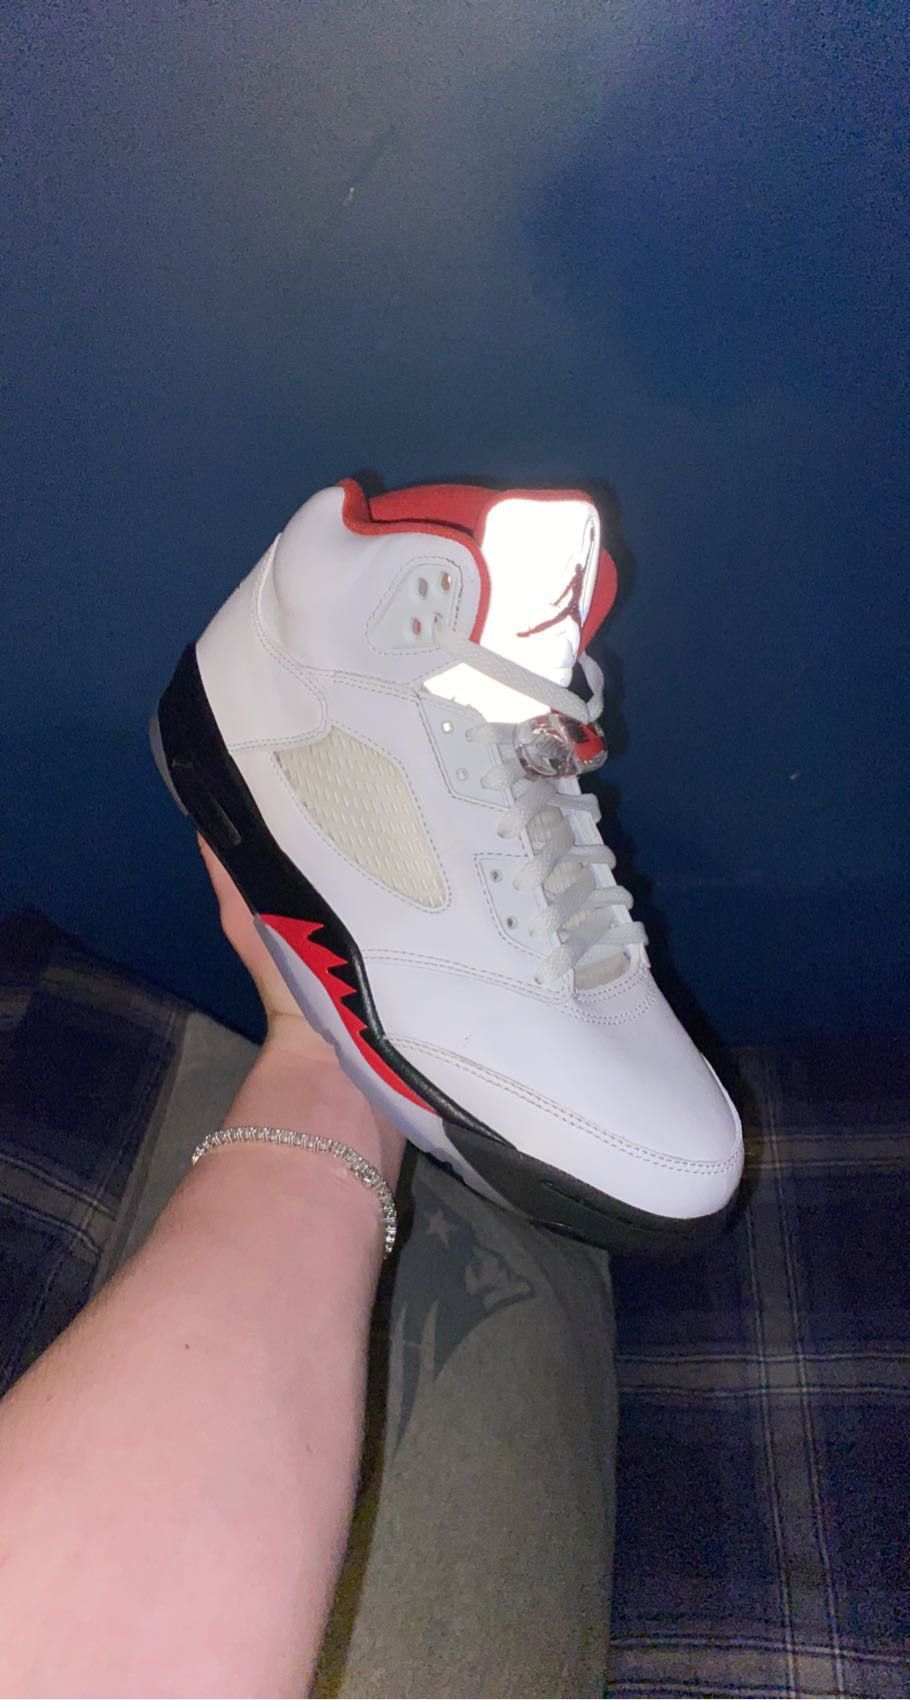 Jordan 5 Retro “Fire Red”